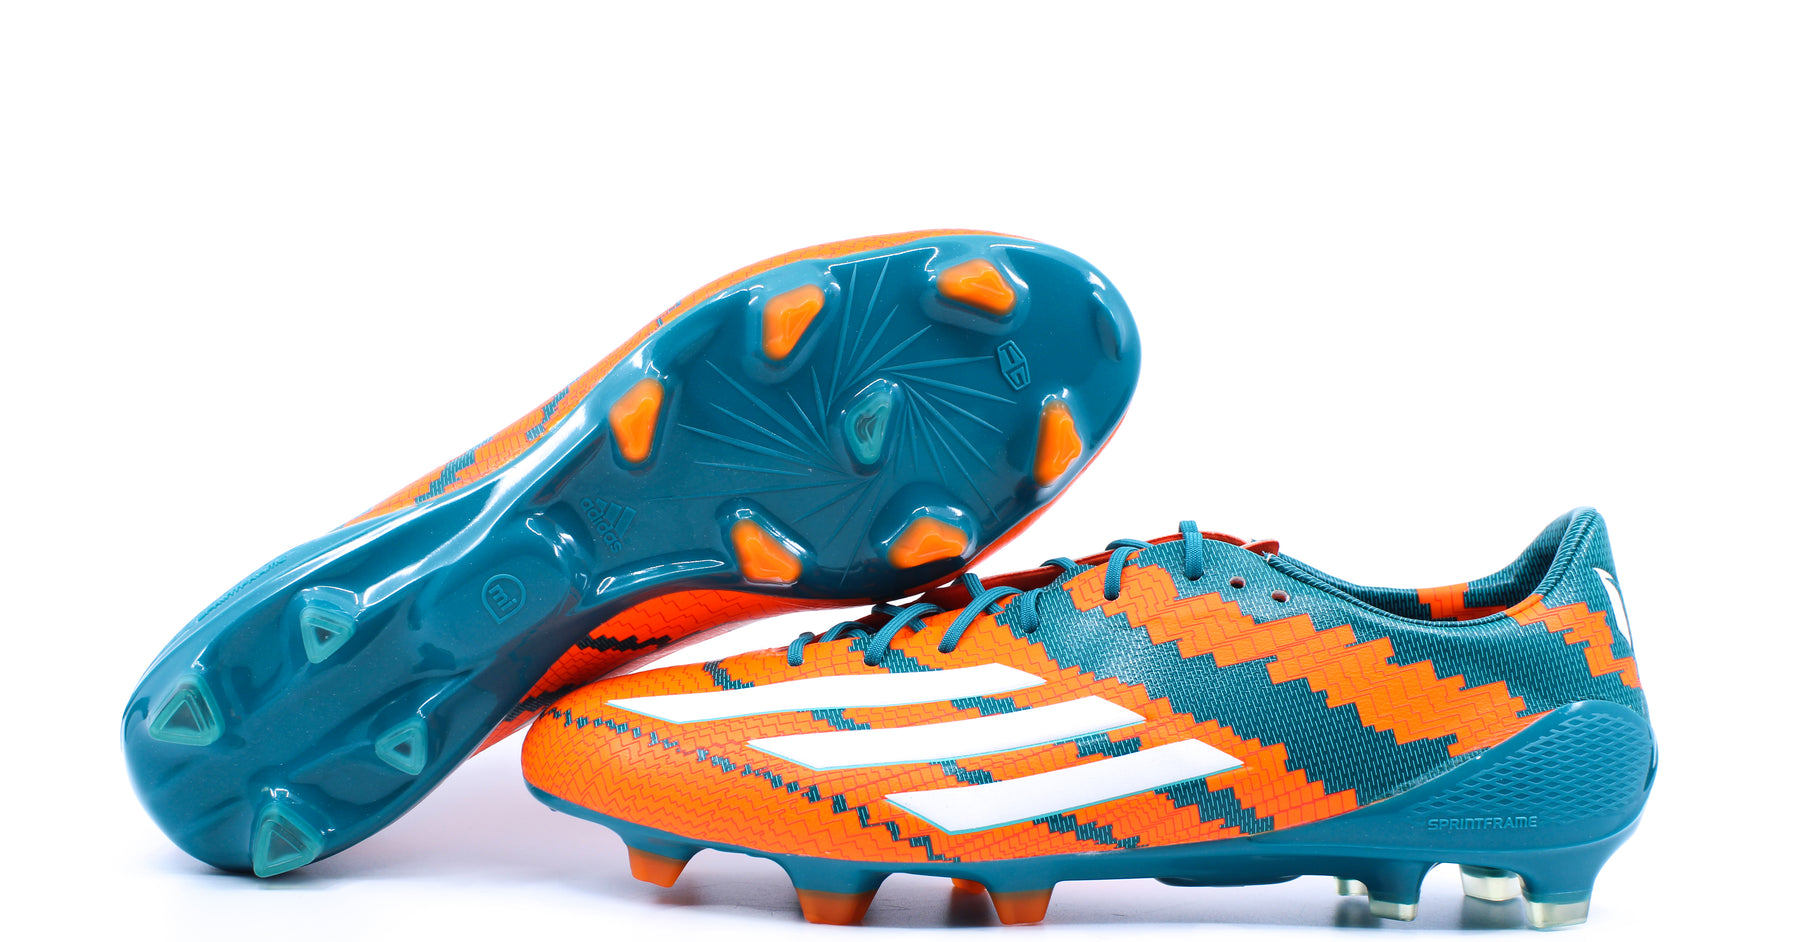 Adidas Messi 10.1 Power Teal/White/Solar Orange (B44261) – Retro Soccer Cleats